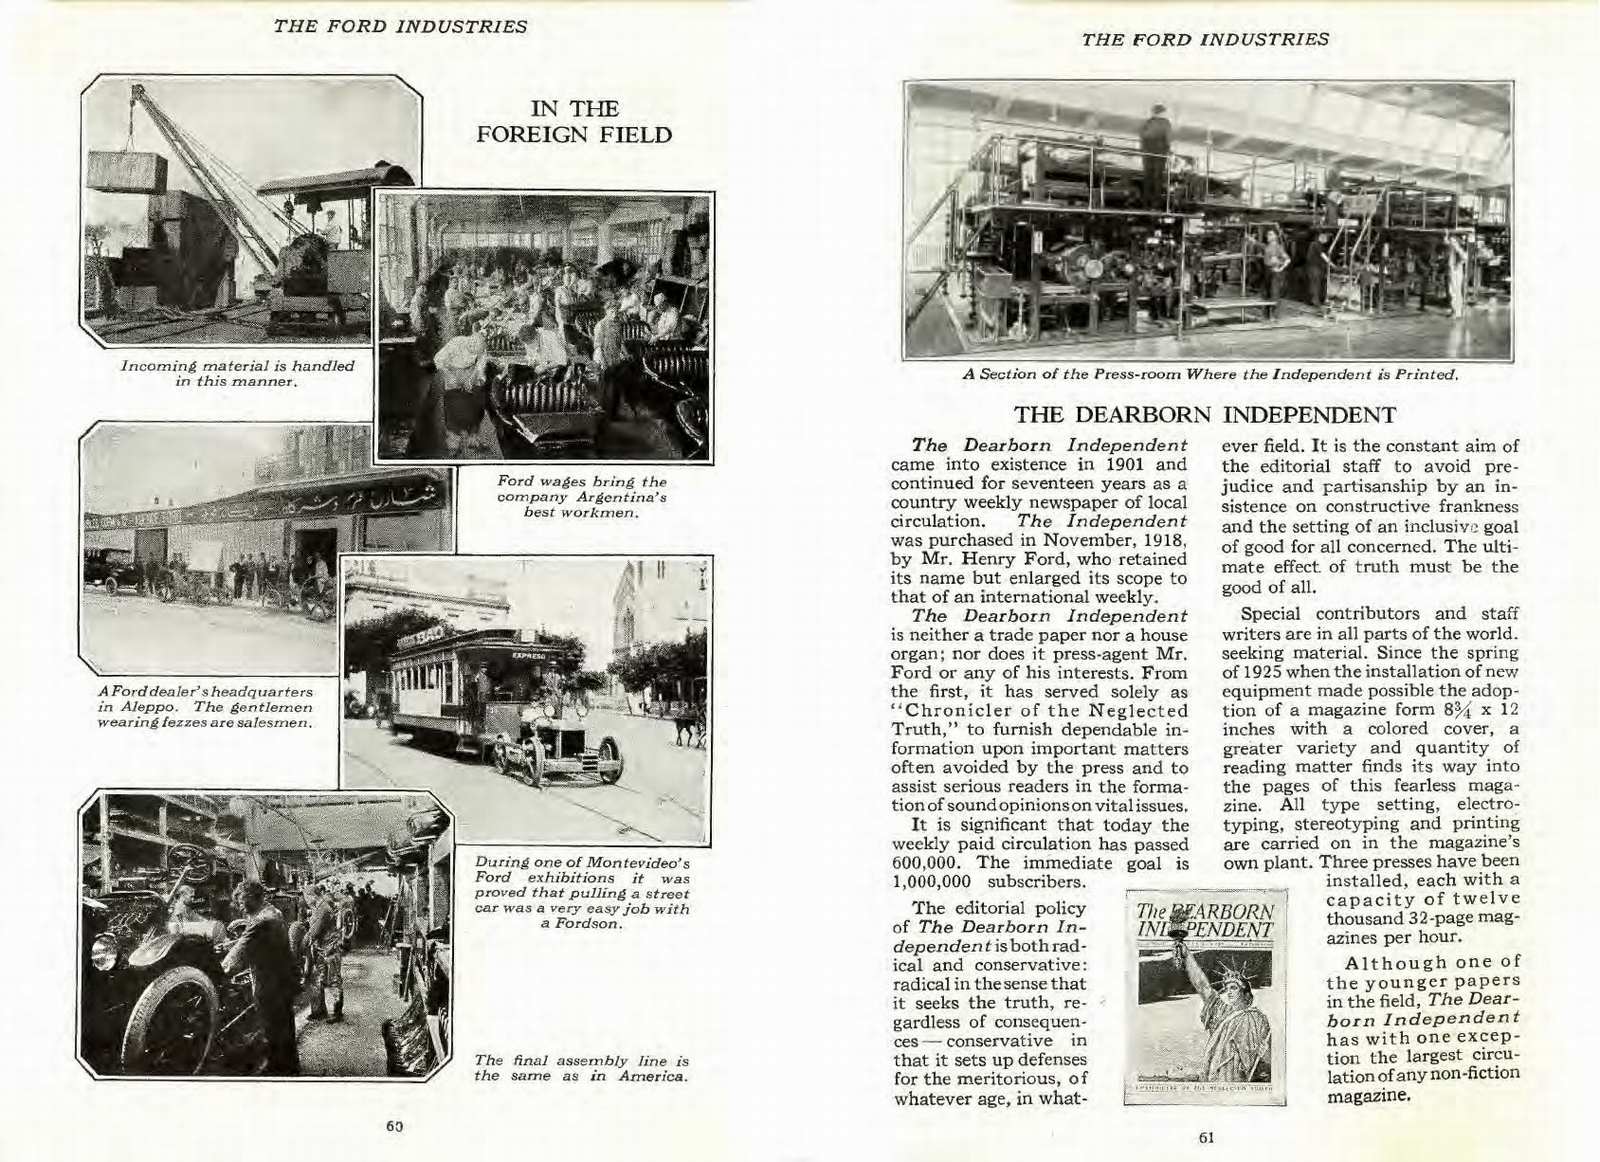 n_1925 -The Ford Industries-60-61.jpg